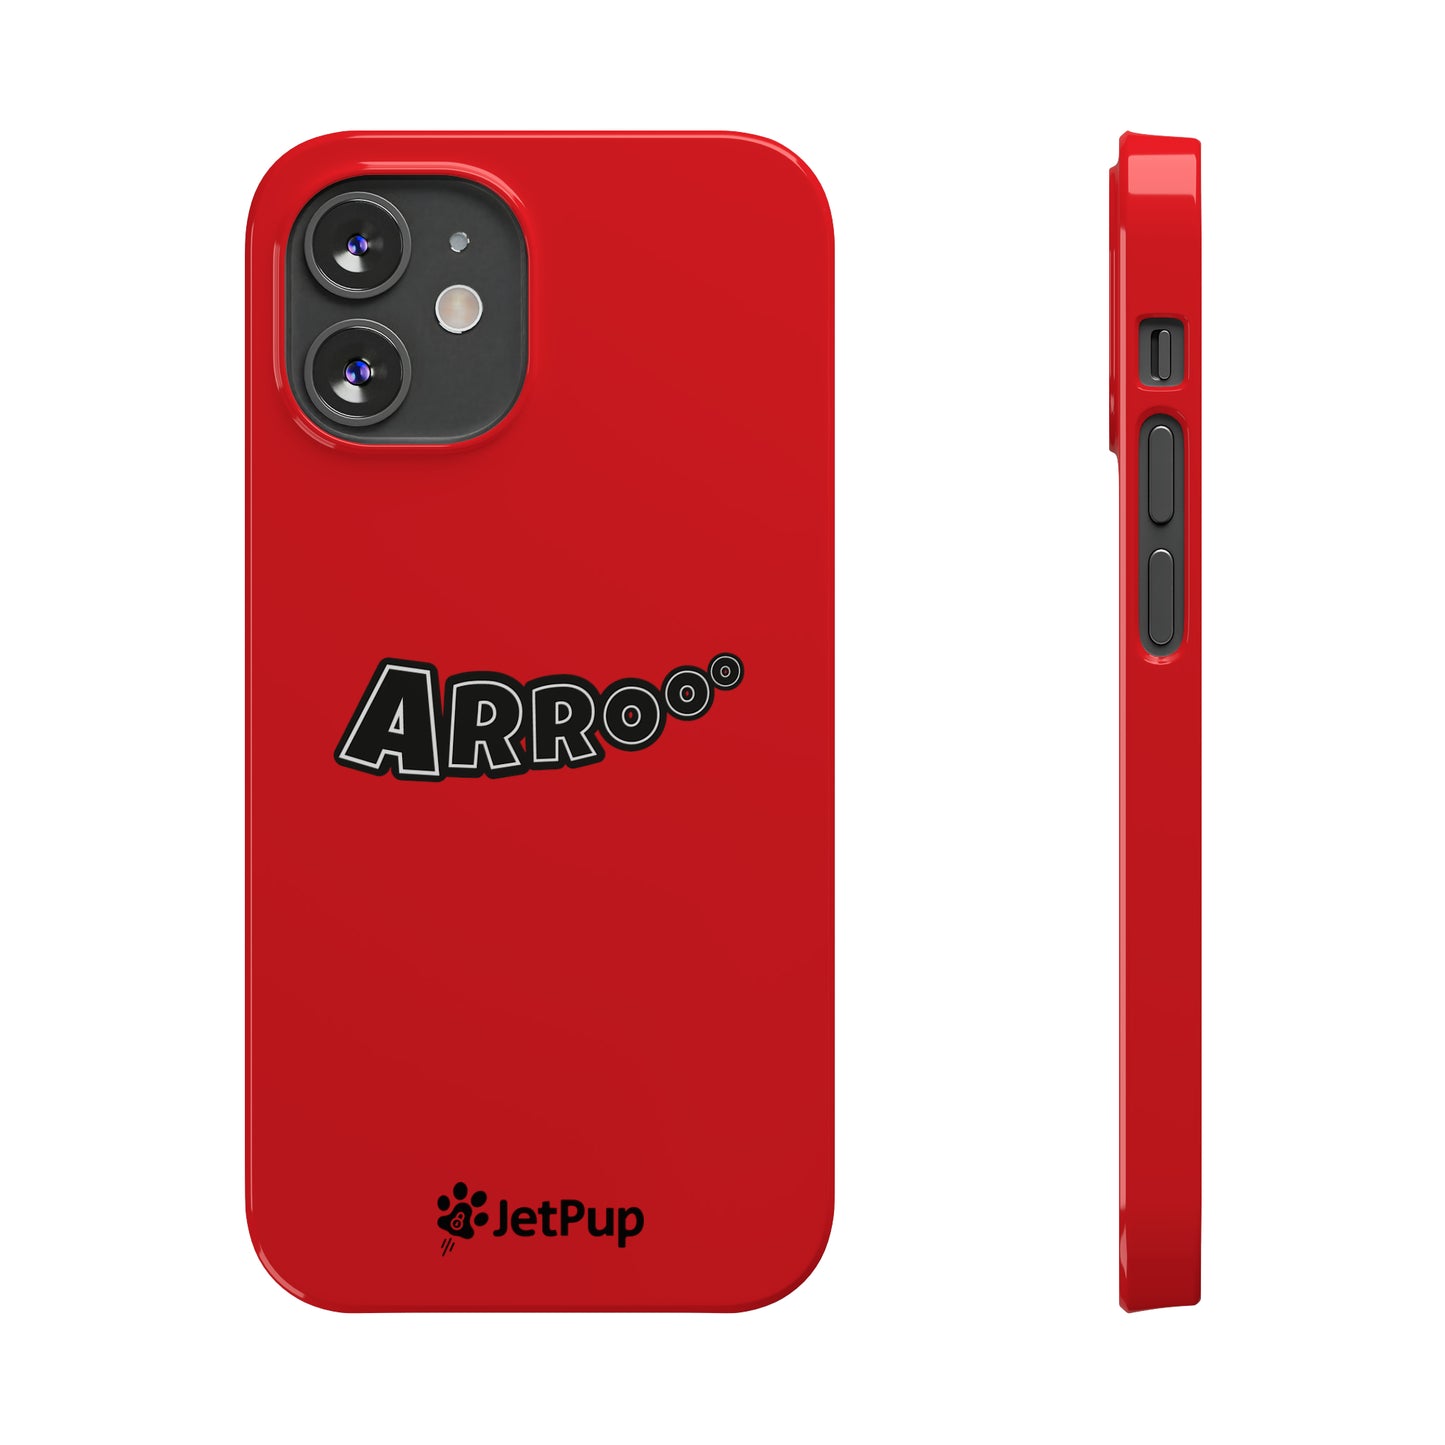 Arrooo  Slim iPhone Cases - Red